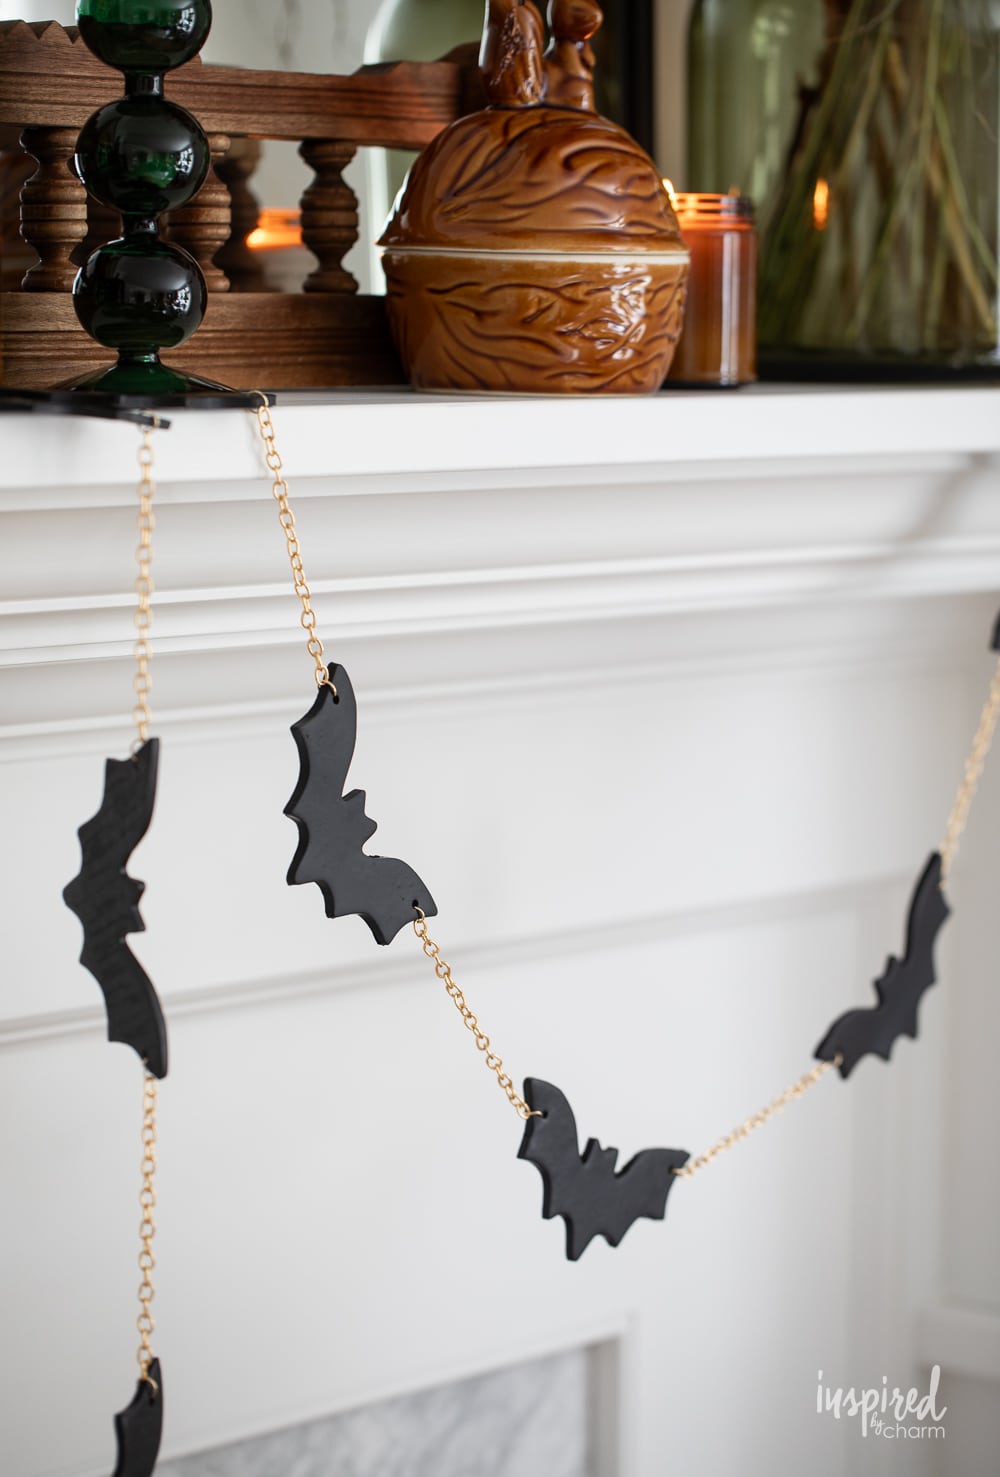 black bat and gold garland hung on a mantel.